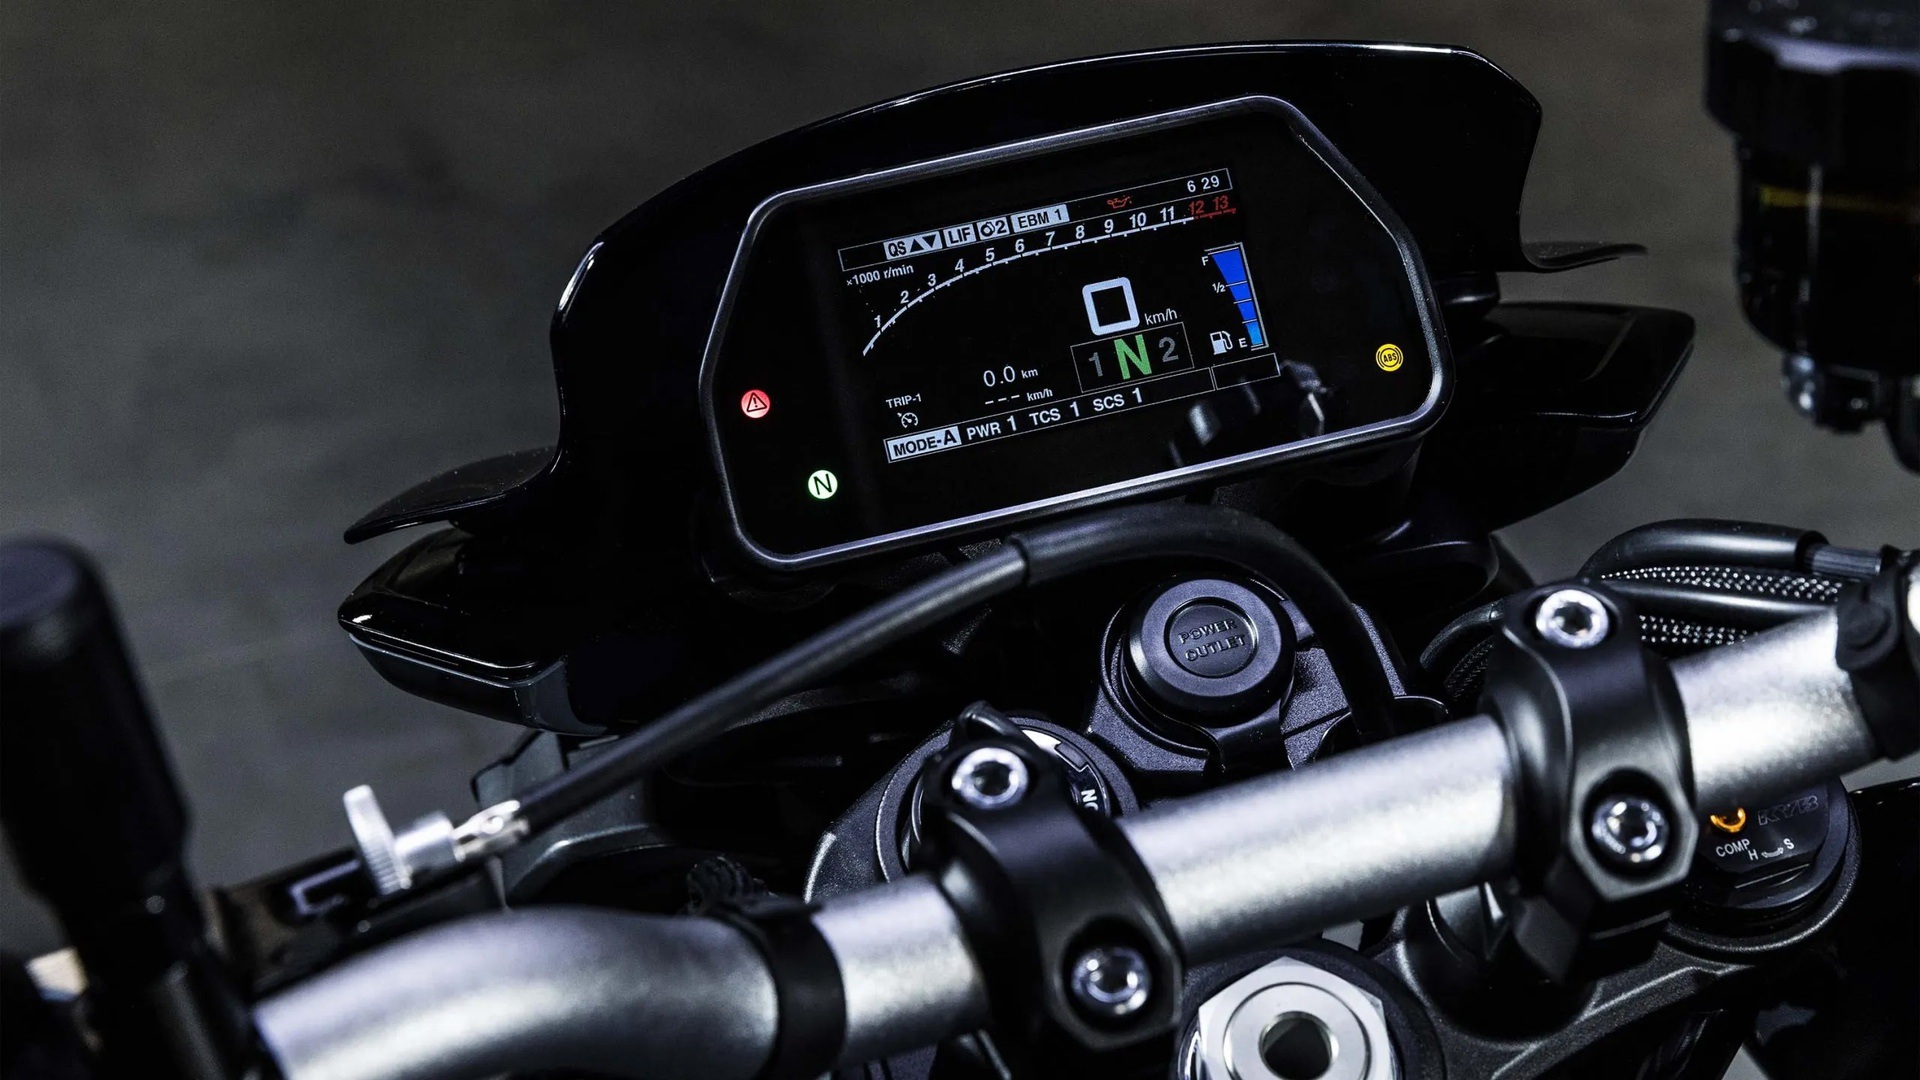 Yamaha 2022 MT-10 SP motorcycle's dash in detail